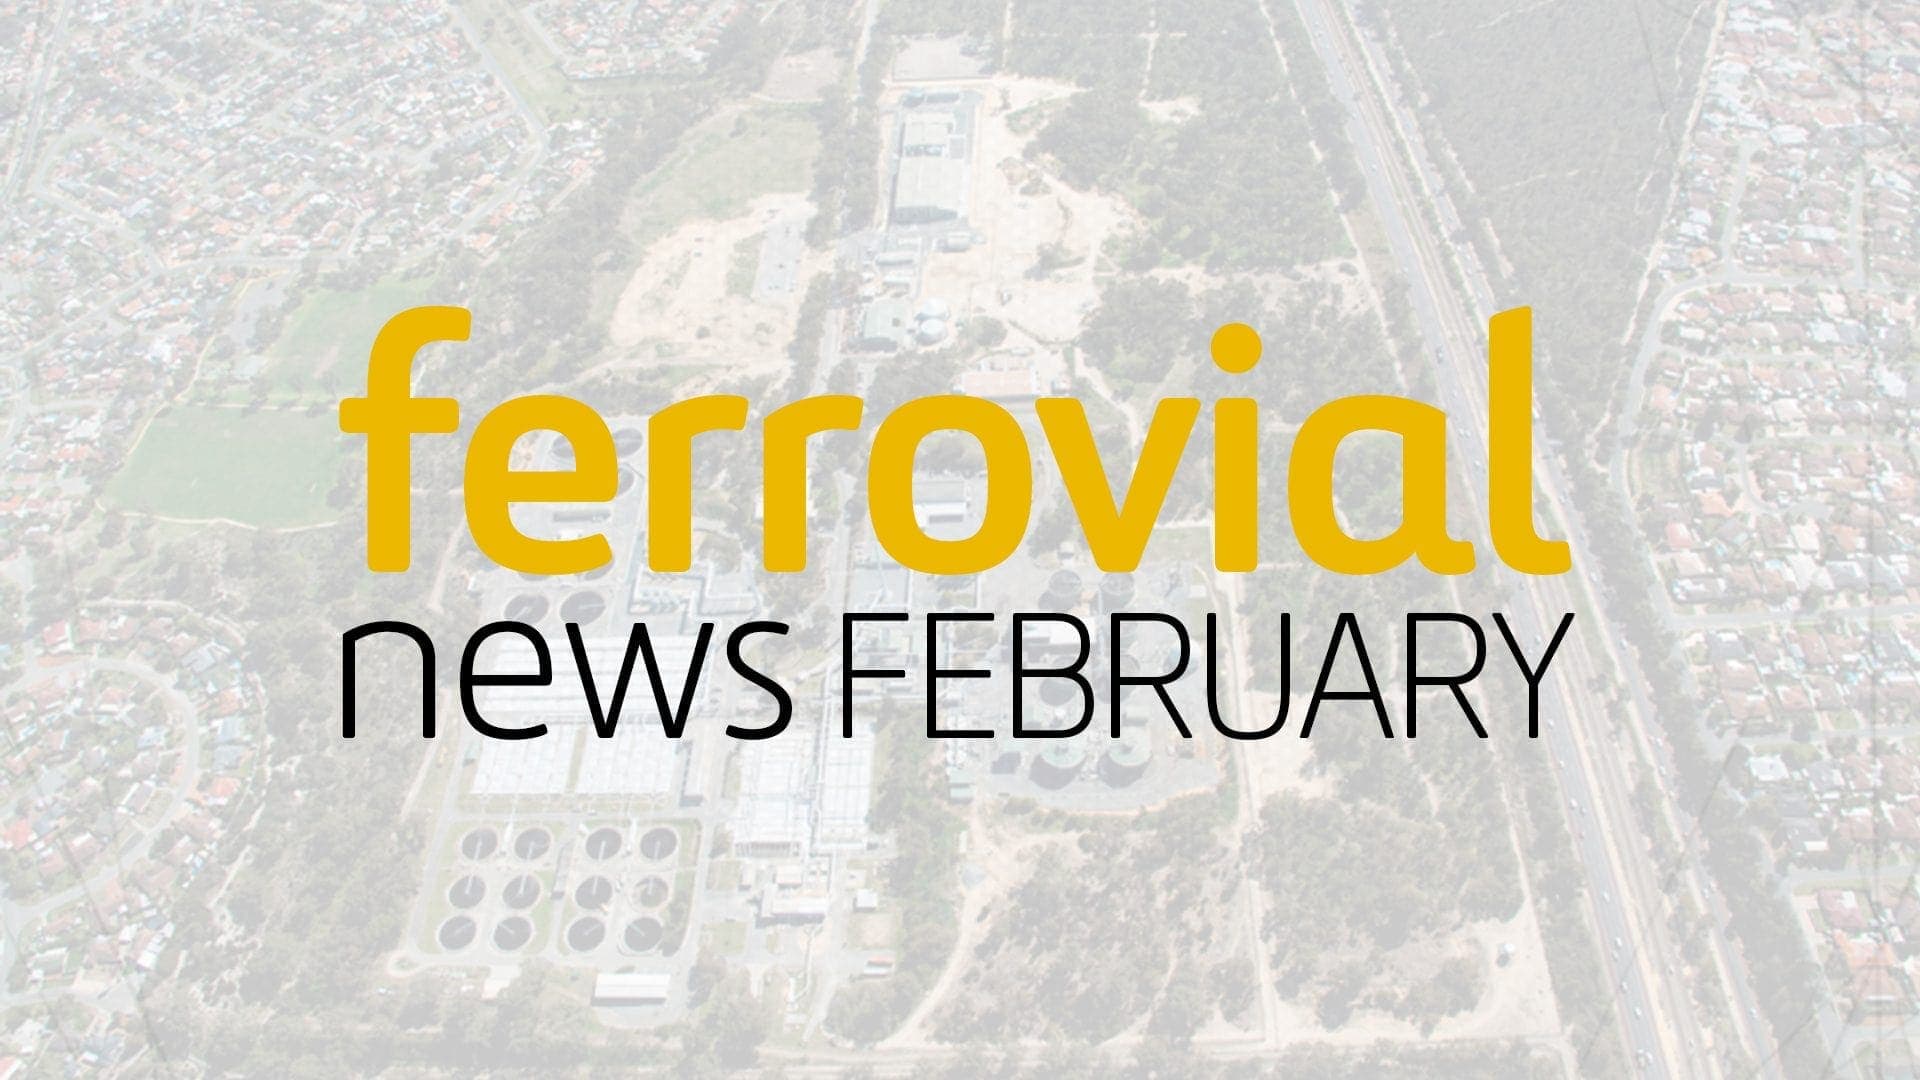 Ferrovial's February 2018 news highlights